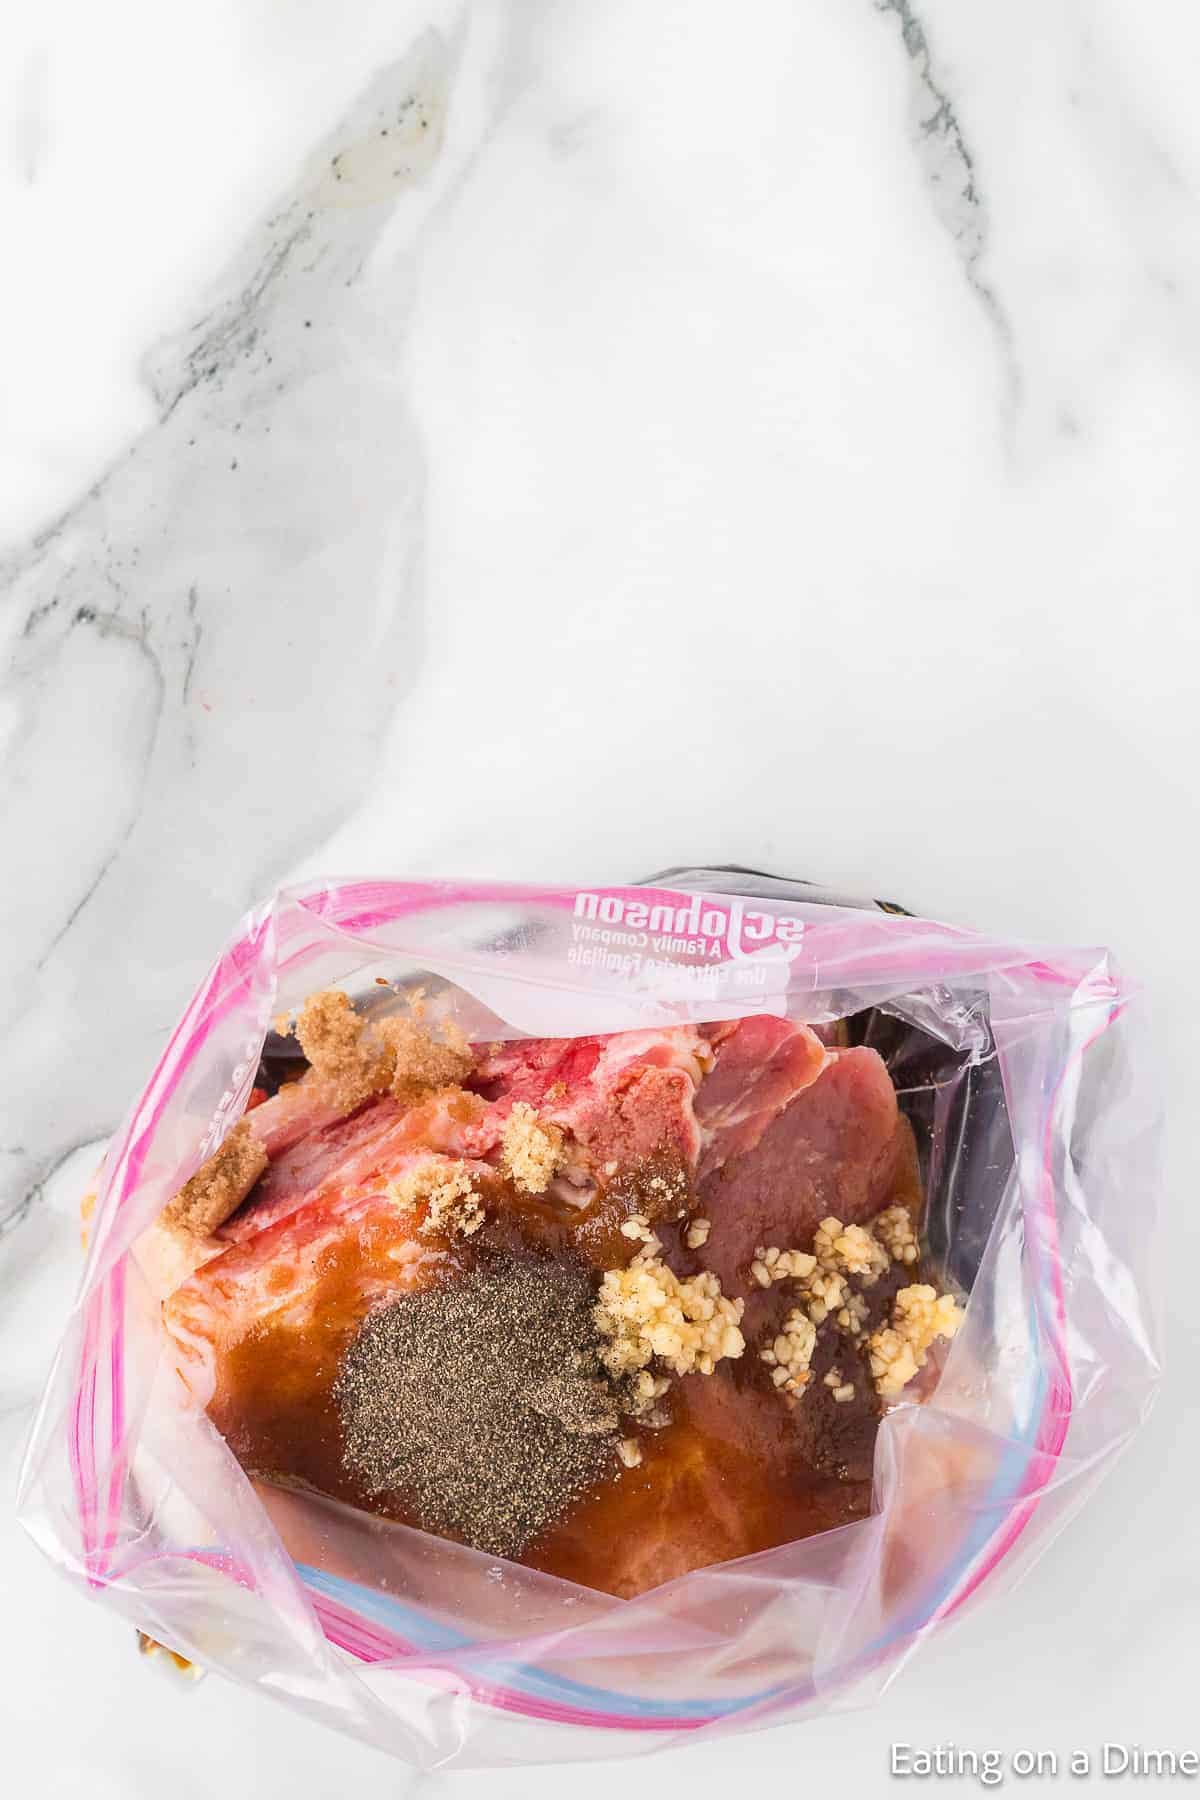 Placing pork chops in a ziplock bag and marinade